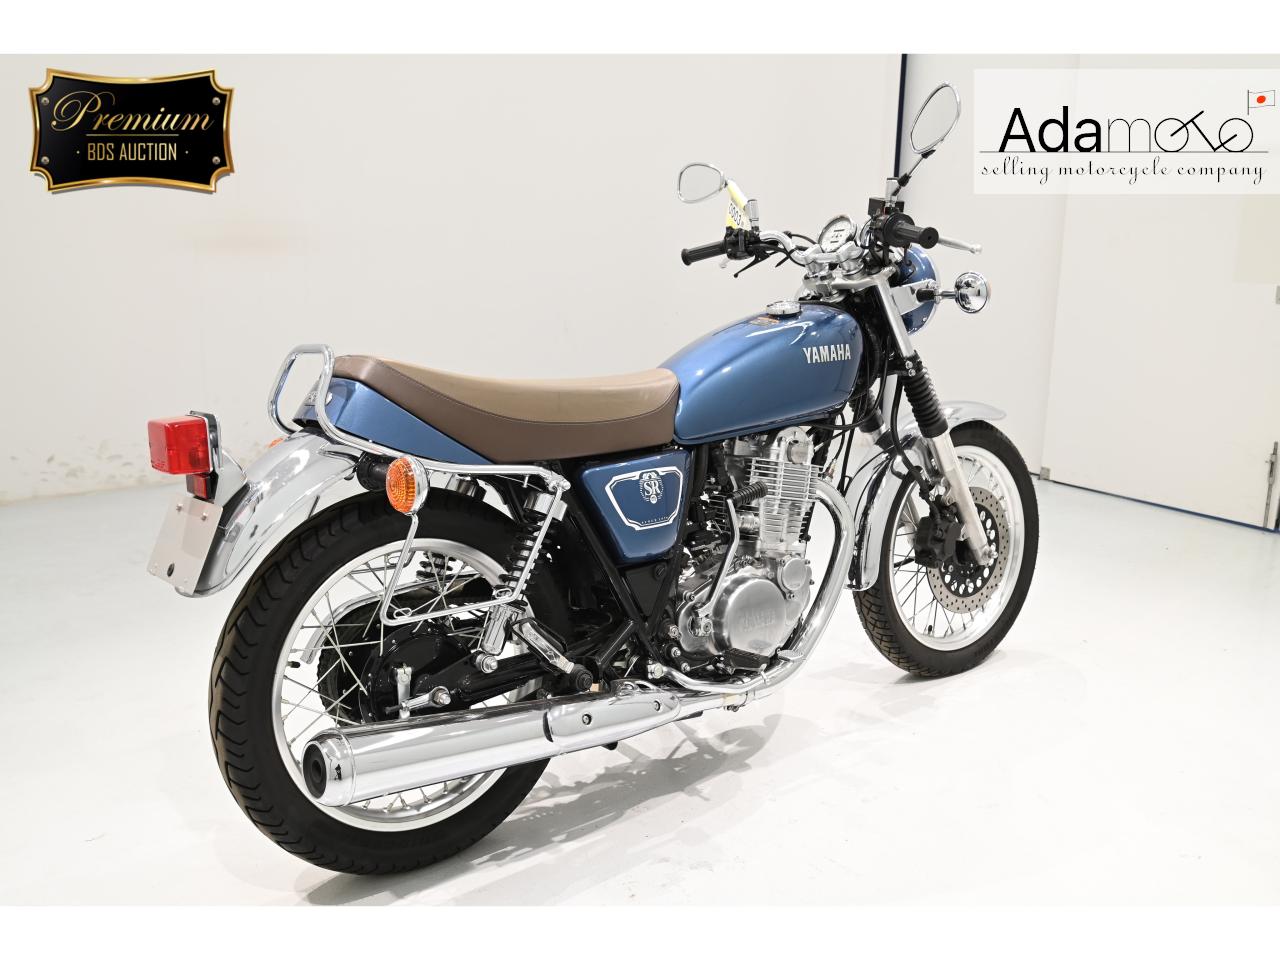 Yamaha SR400 5 - Adamoto - Motorcycles from Japan